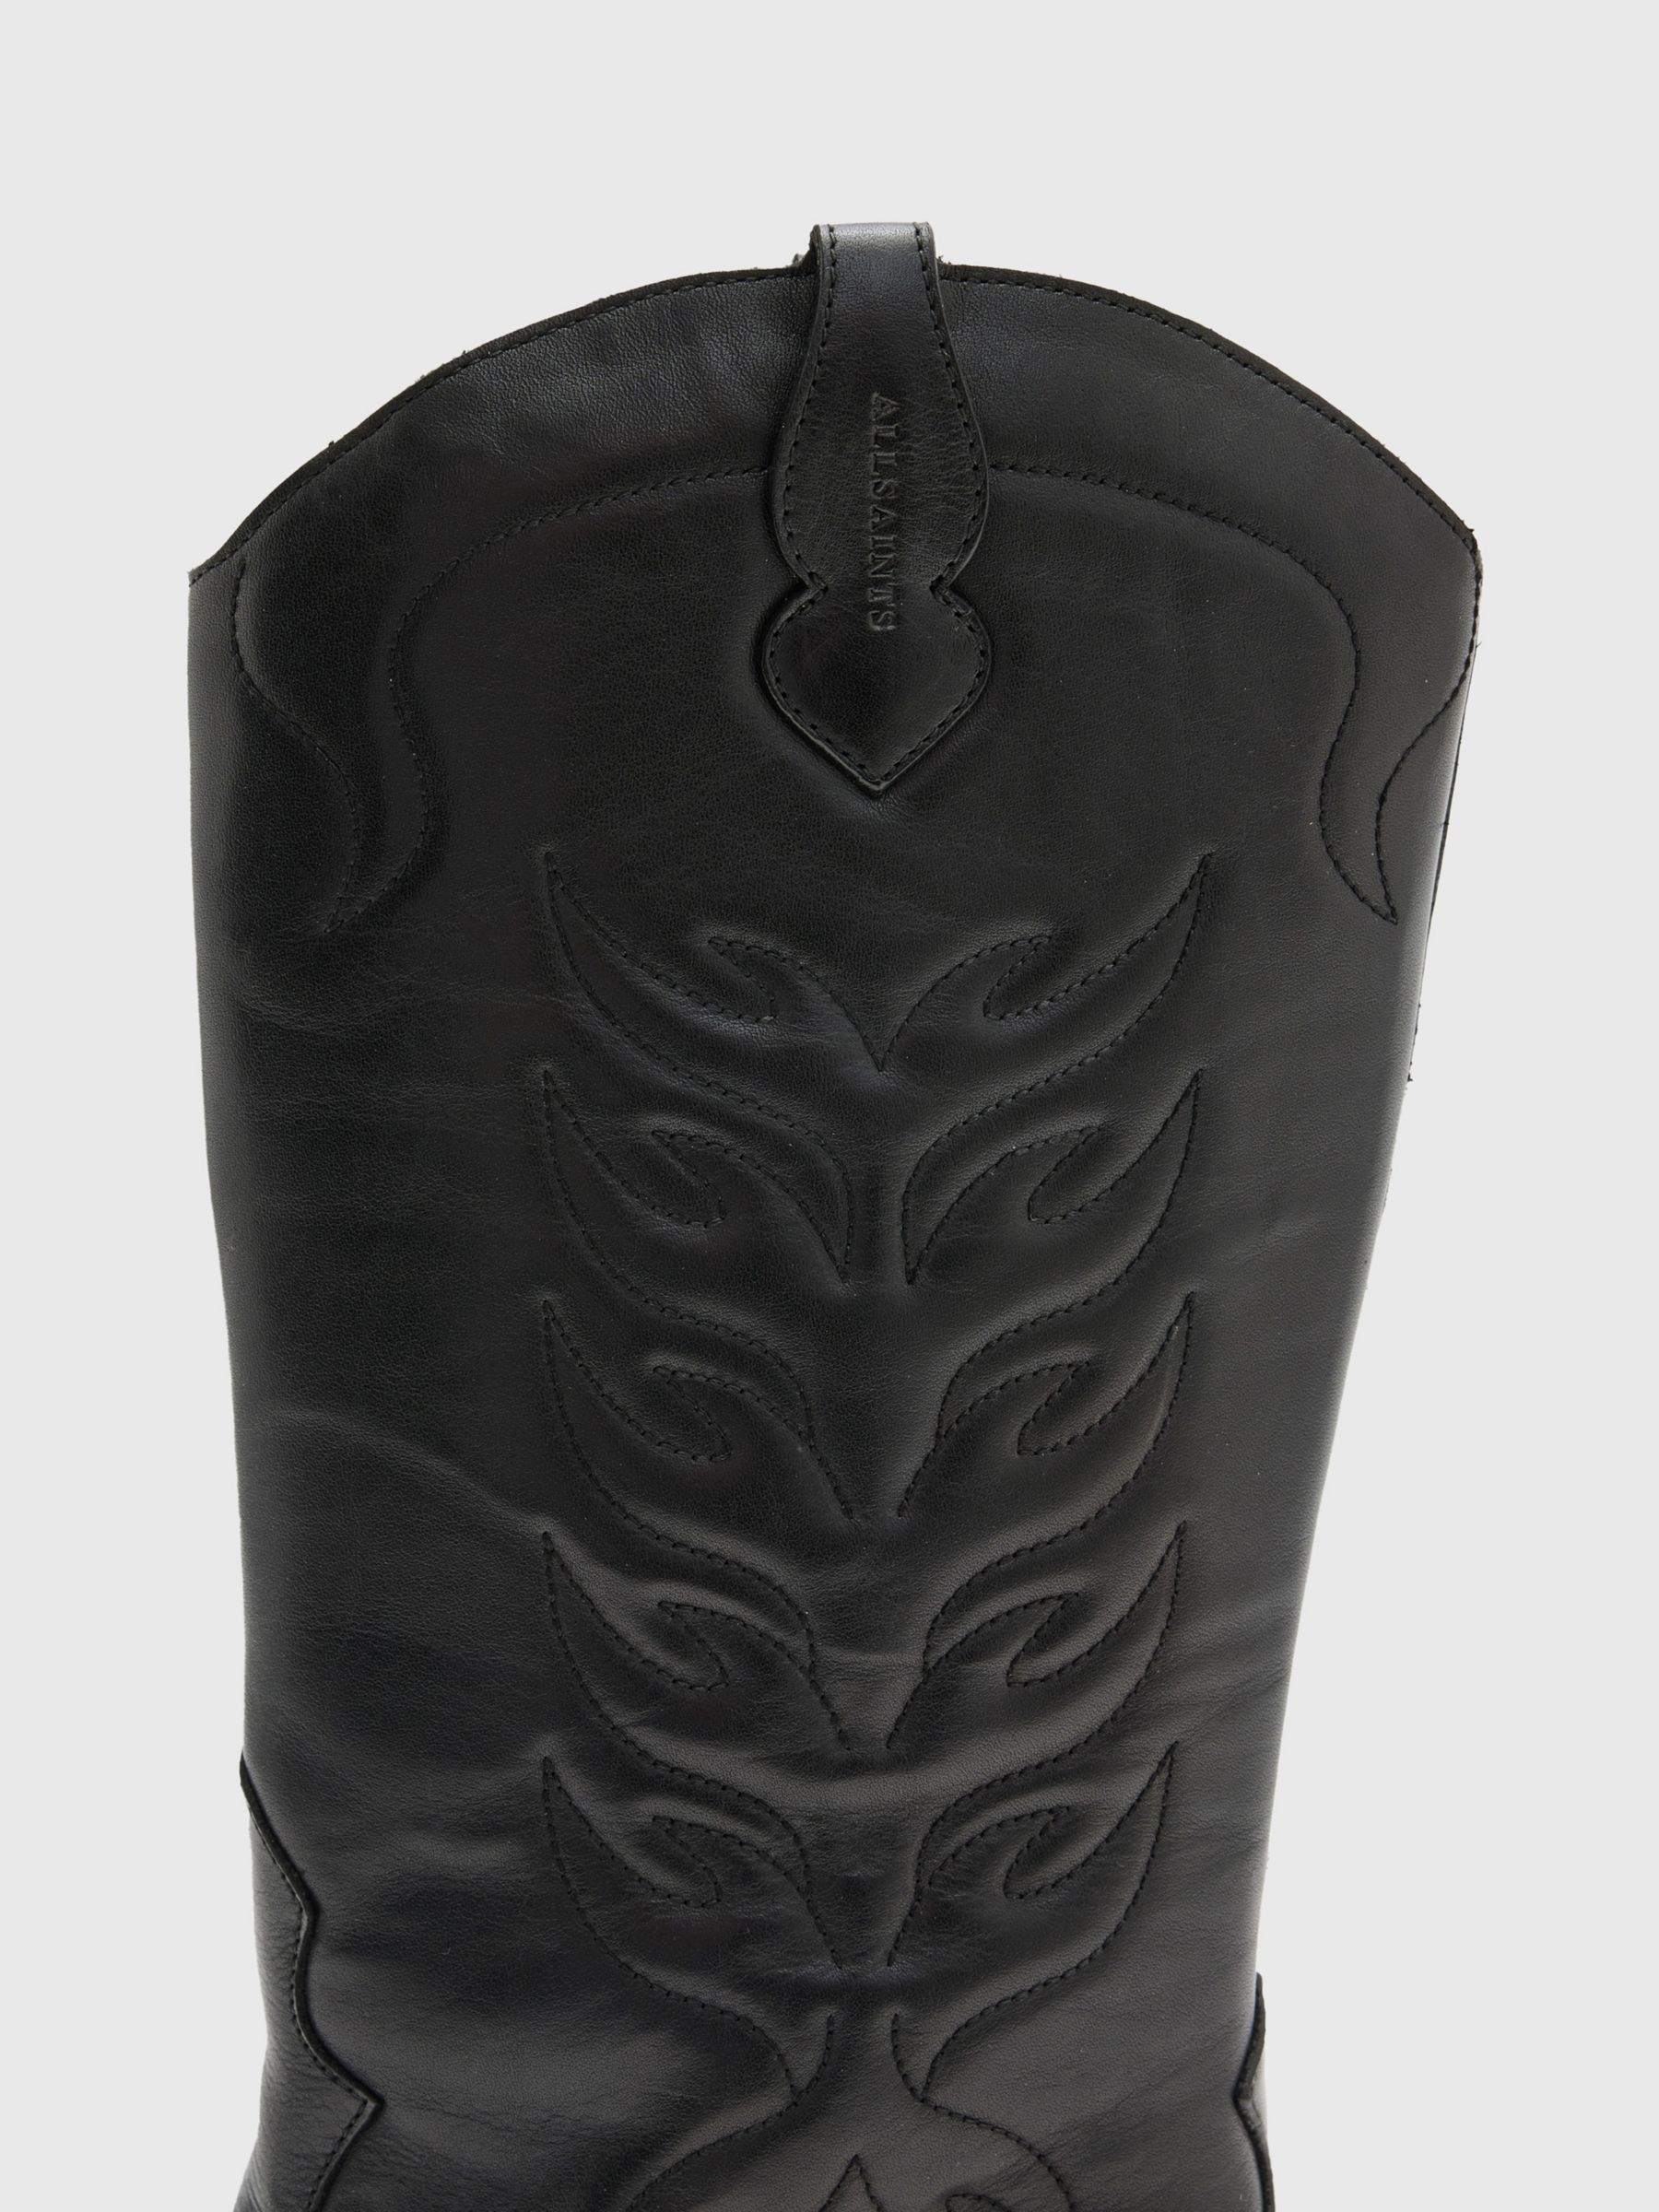 AllSaints Dolly Leather Cowboy Boots, Black, 3